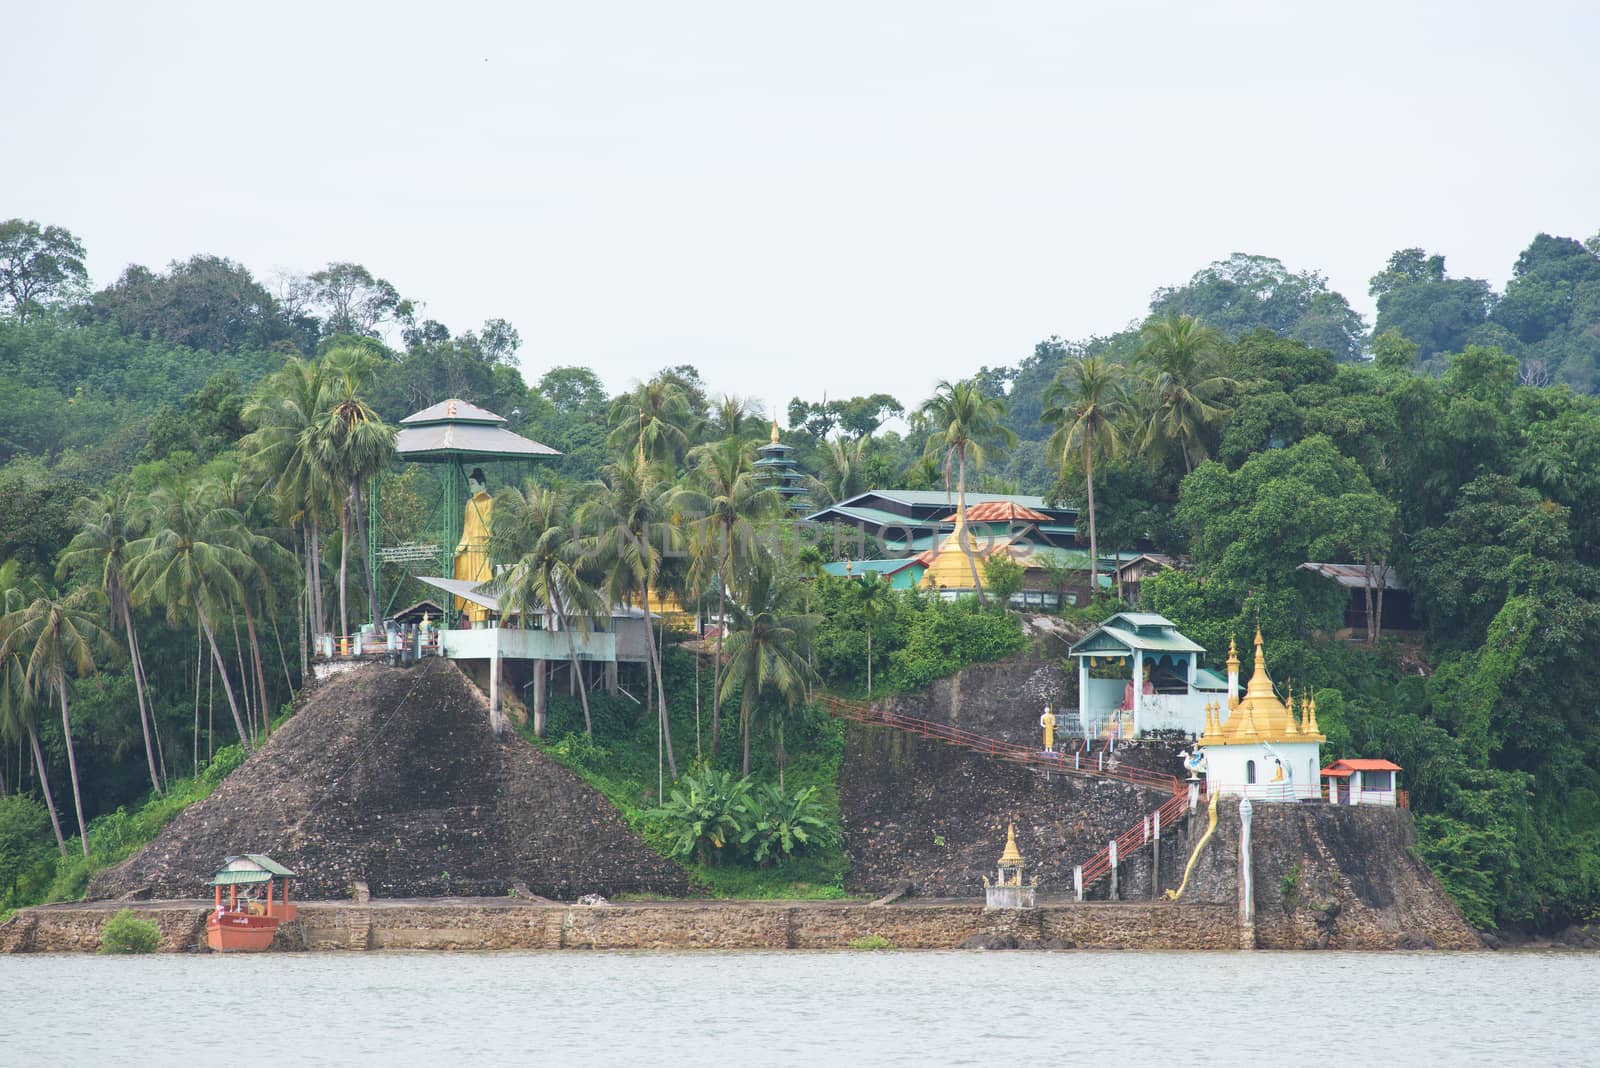 Seaside Buddhist pagoda on one of the islands of the Myeik Archipelago in the Tanintharyi Region of Myanmar.